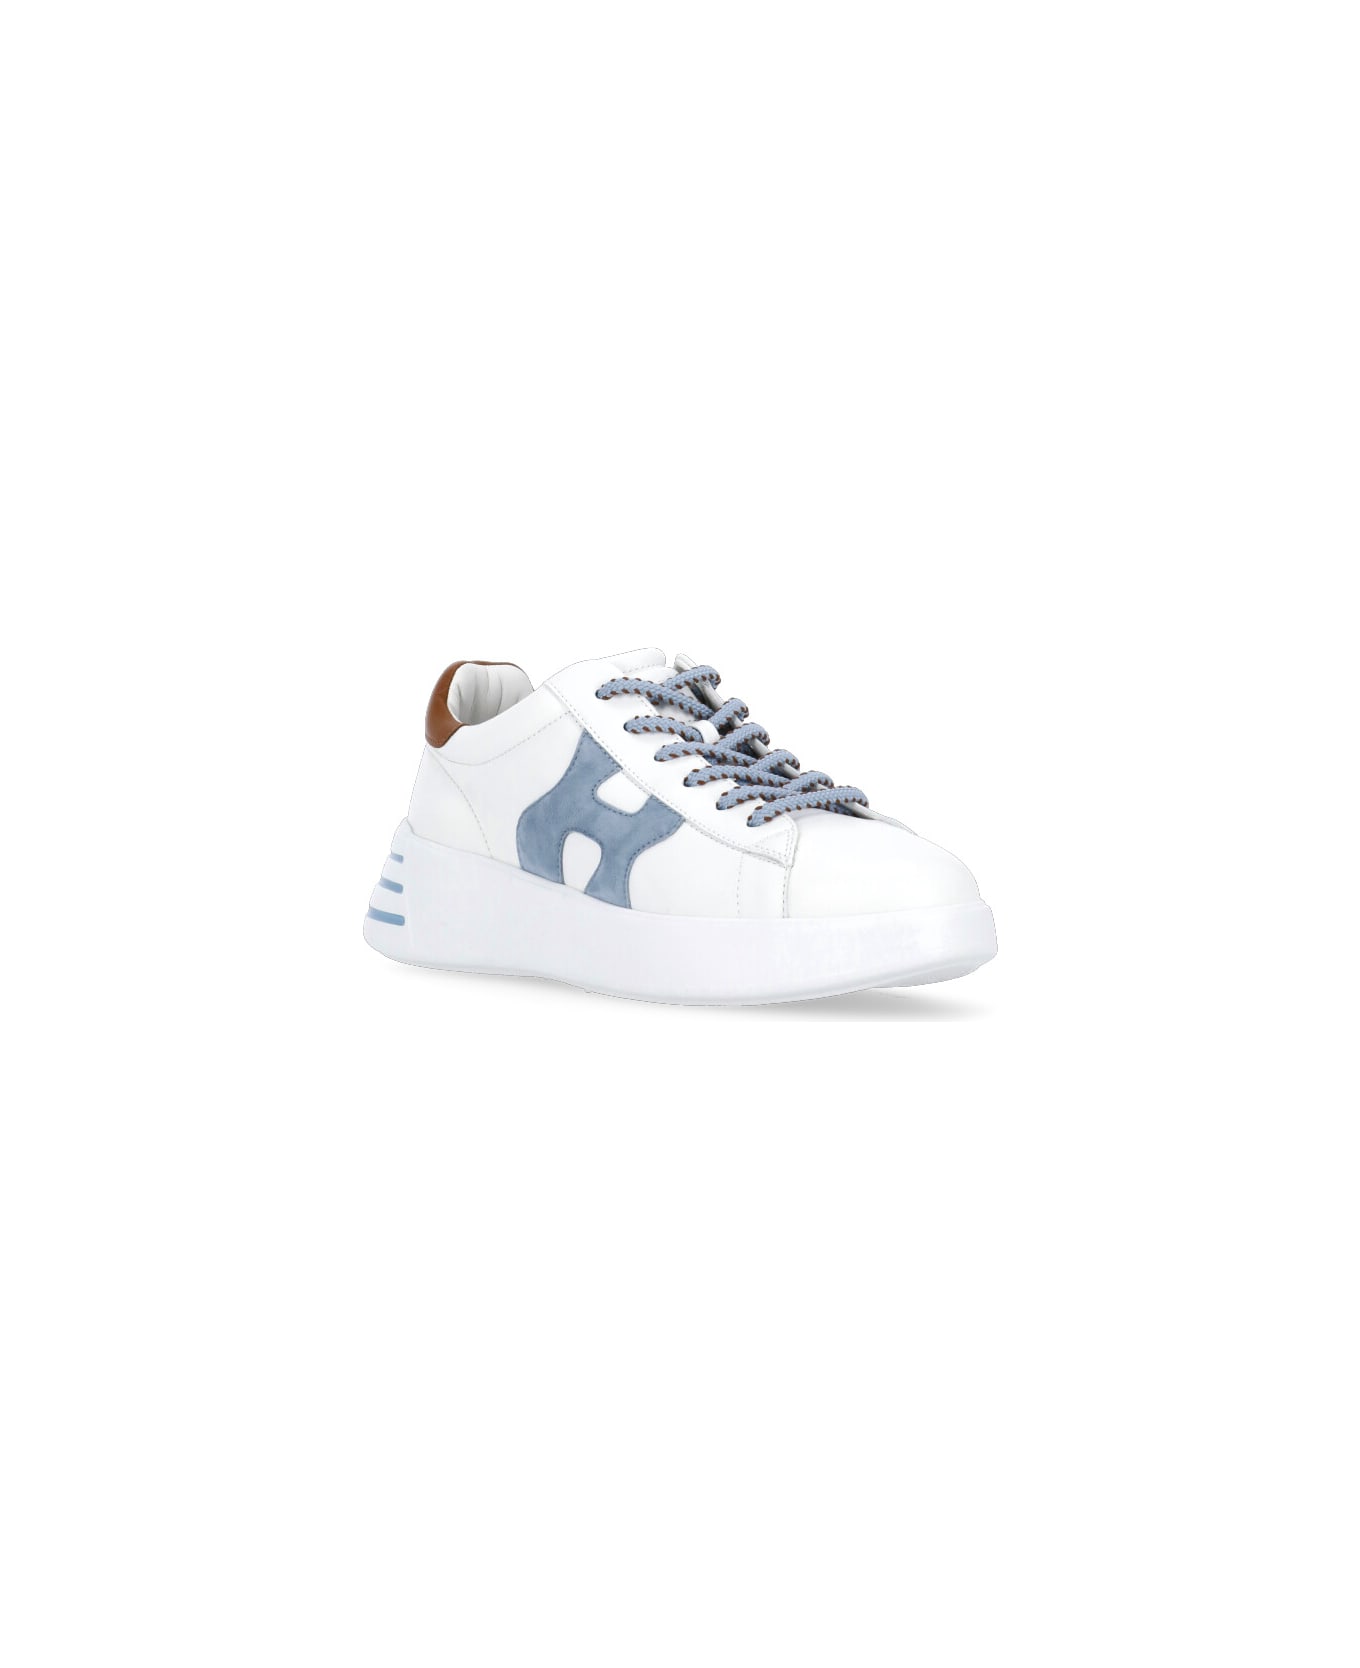 Hogan Rebel H564 Sneakers - White